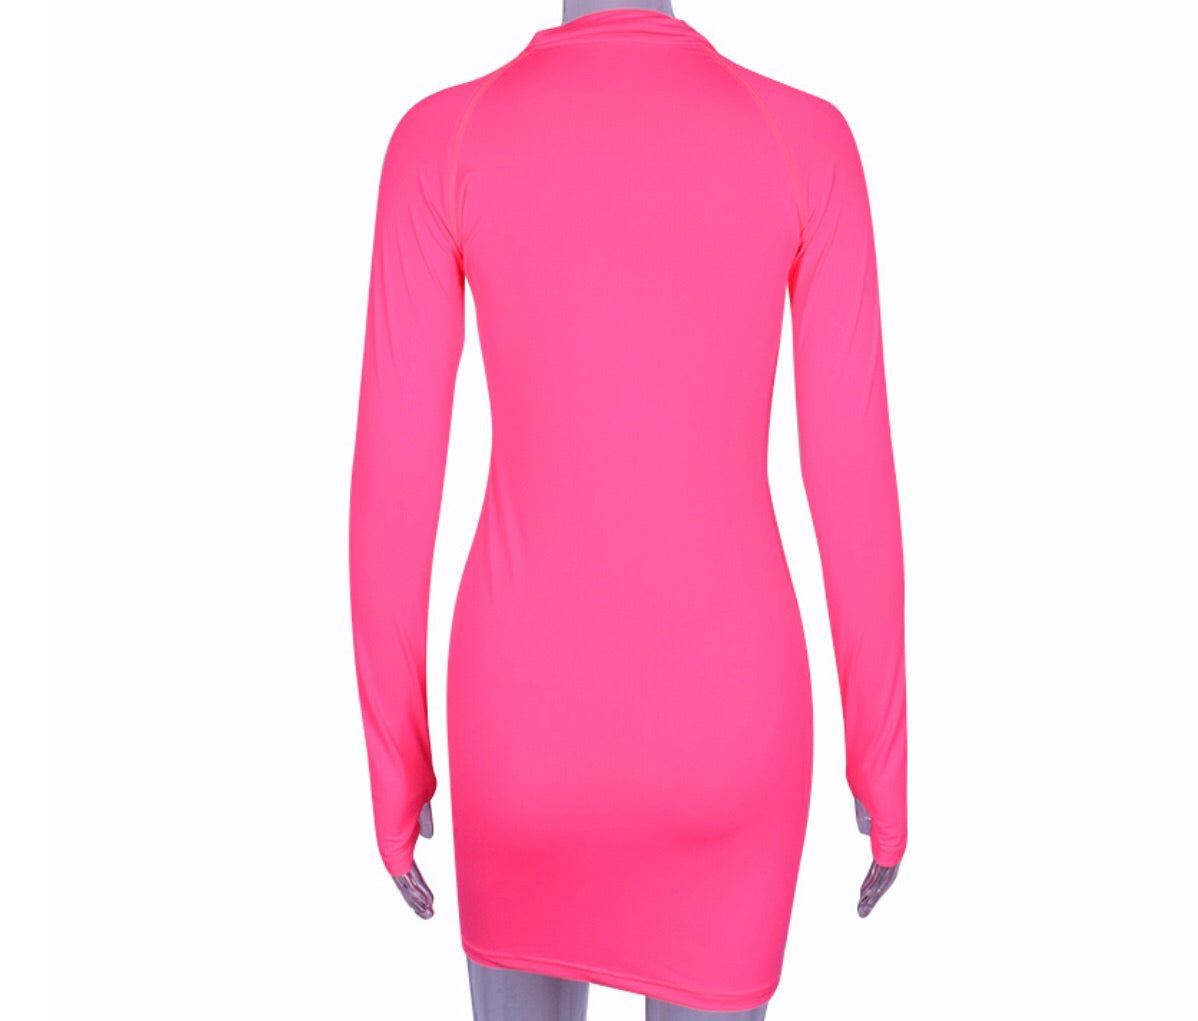 “Kulture” Solid Sleeve High Neck Zipper (pink)